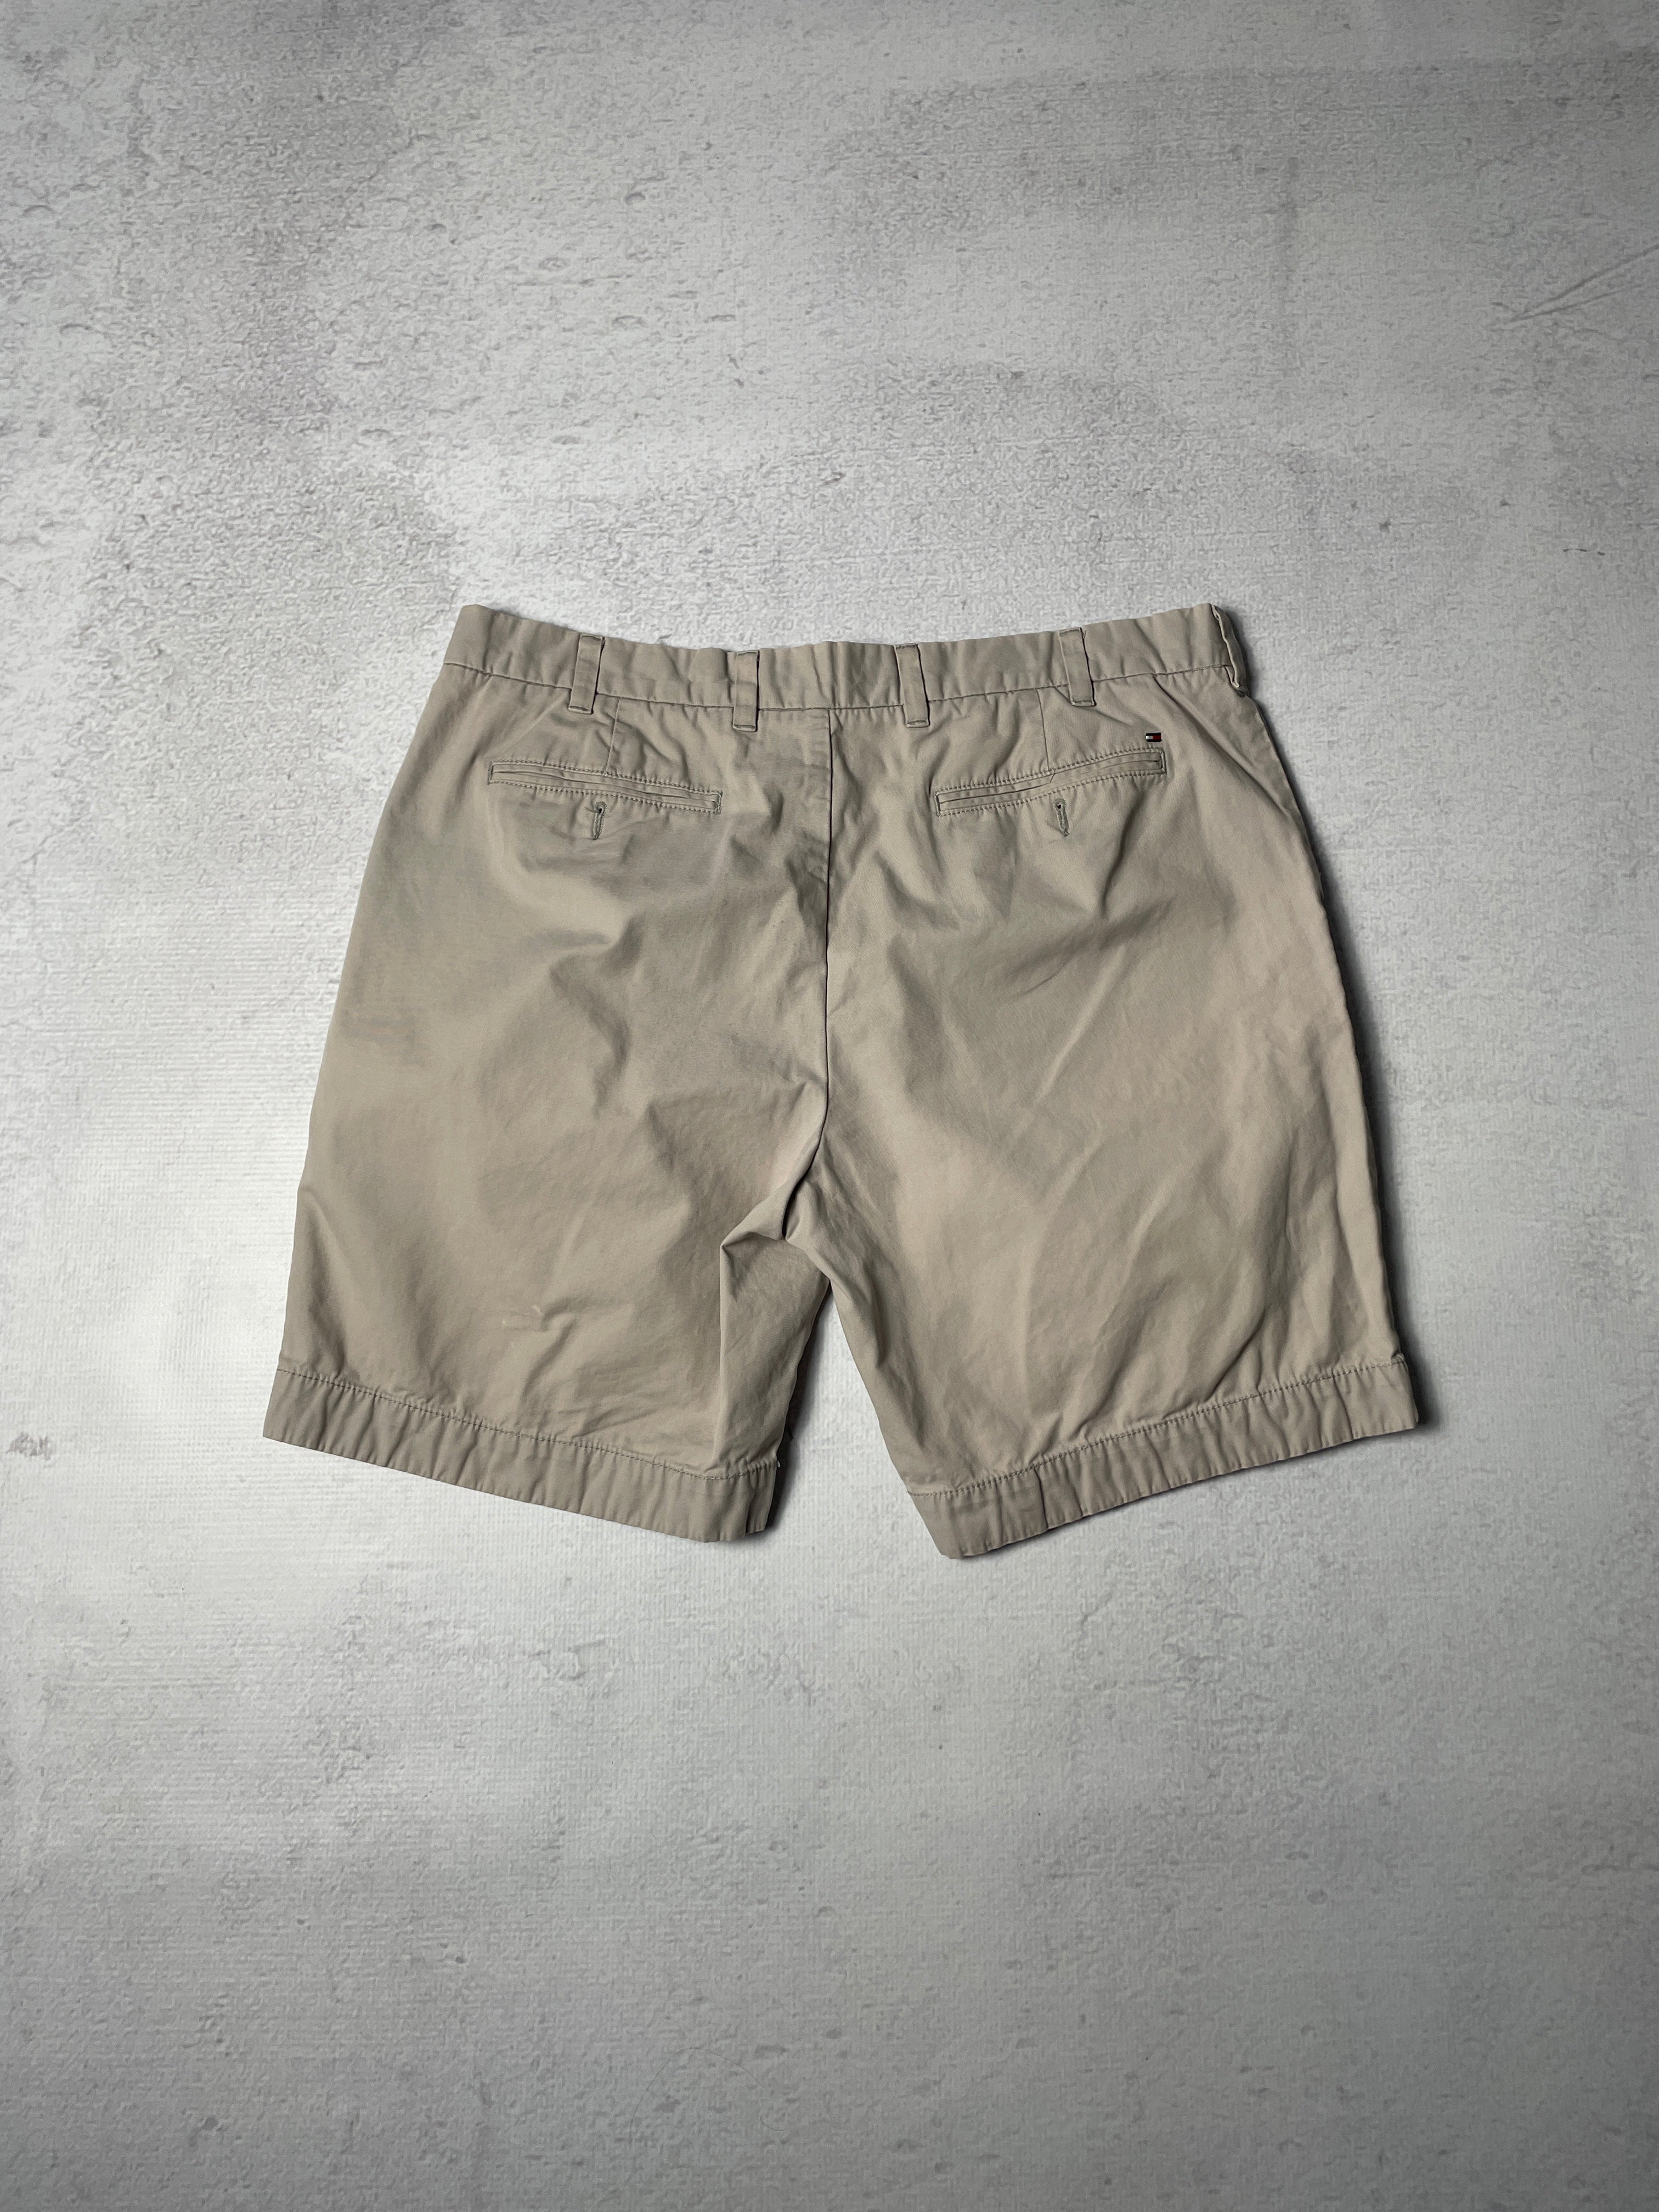 Vintage Tommy Hilfiger Chino Shorts - Men's 38